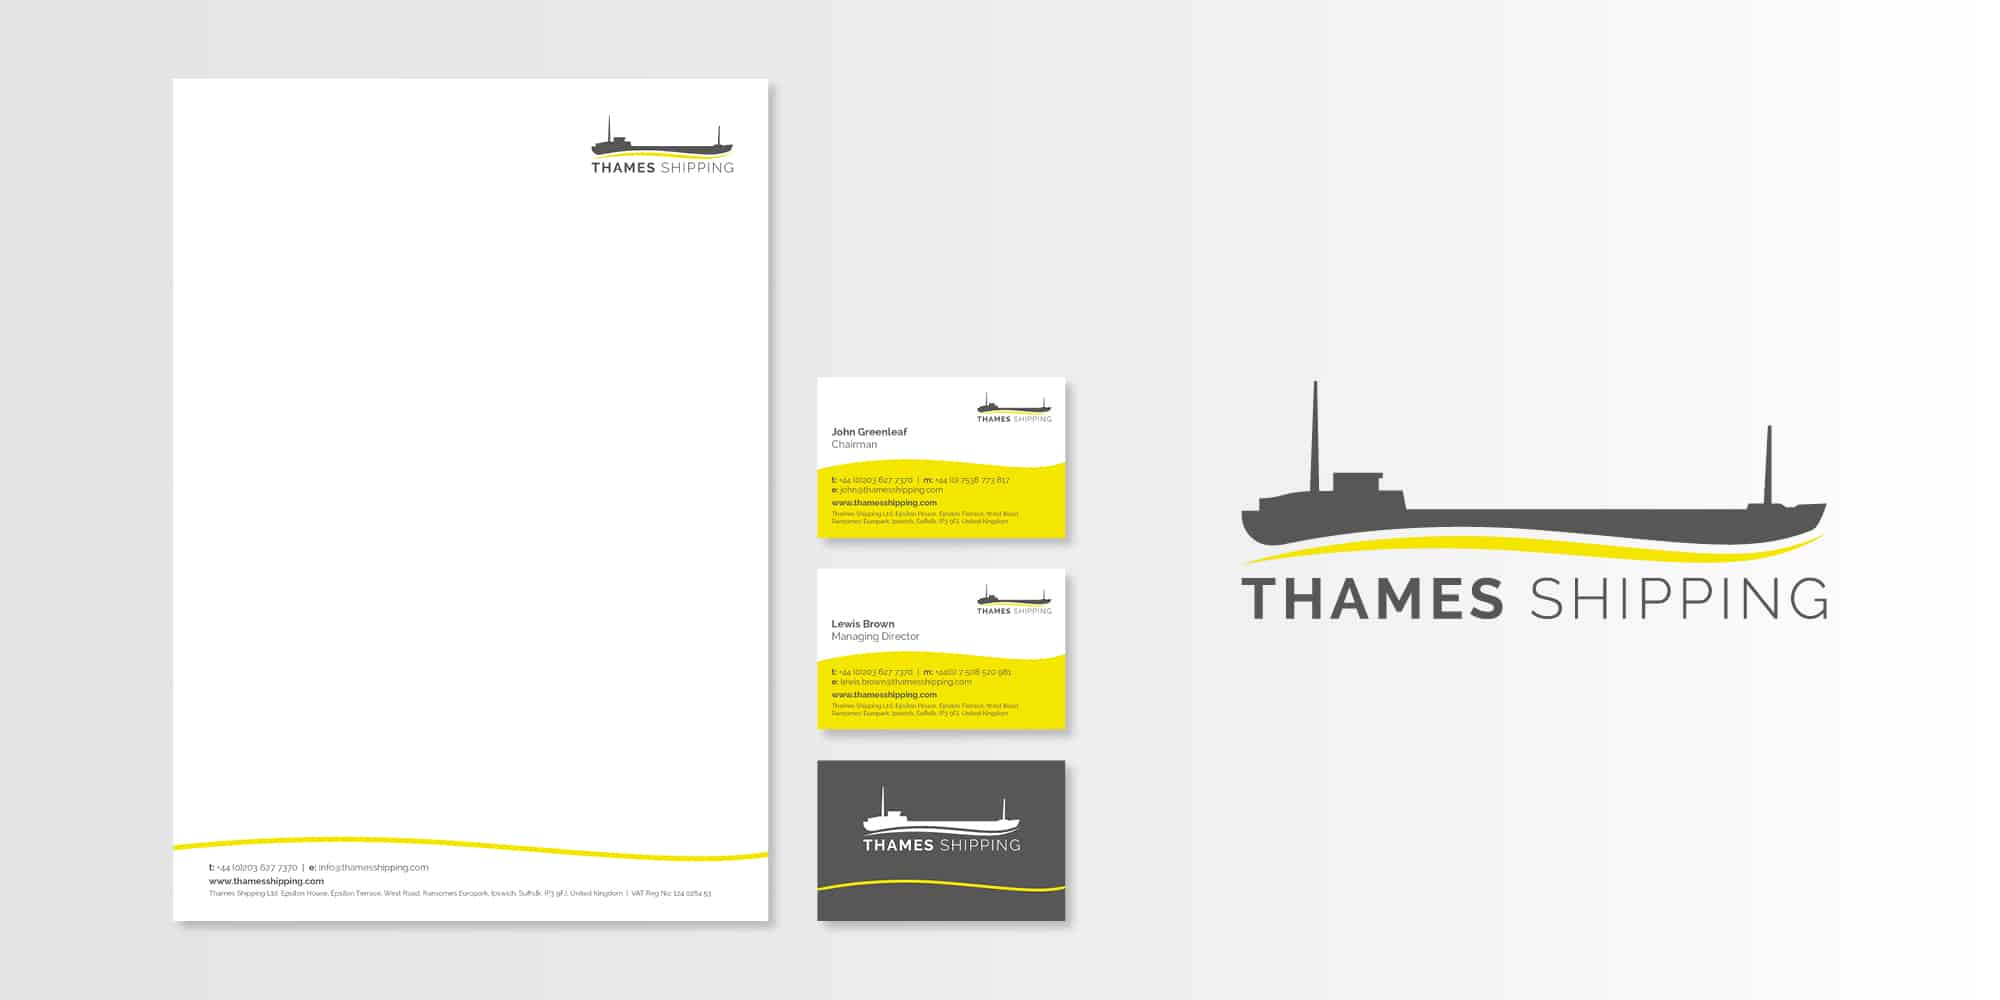 Shipping Company Rebrand Thames Shipping - Stationery Mockup